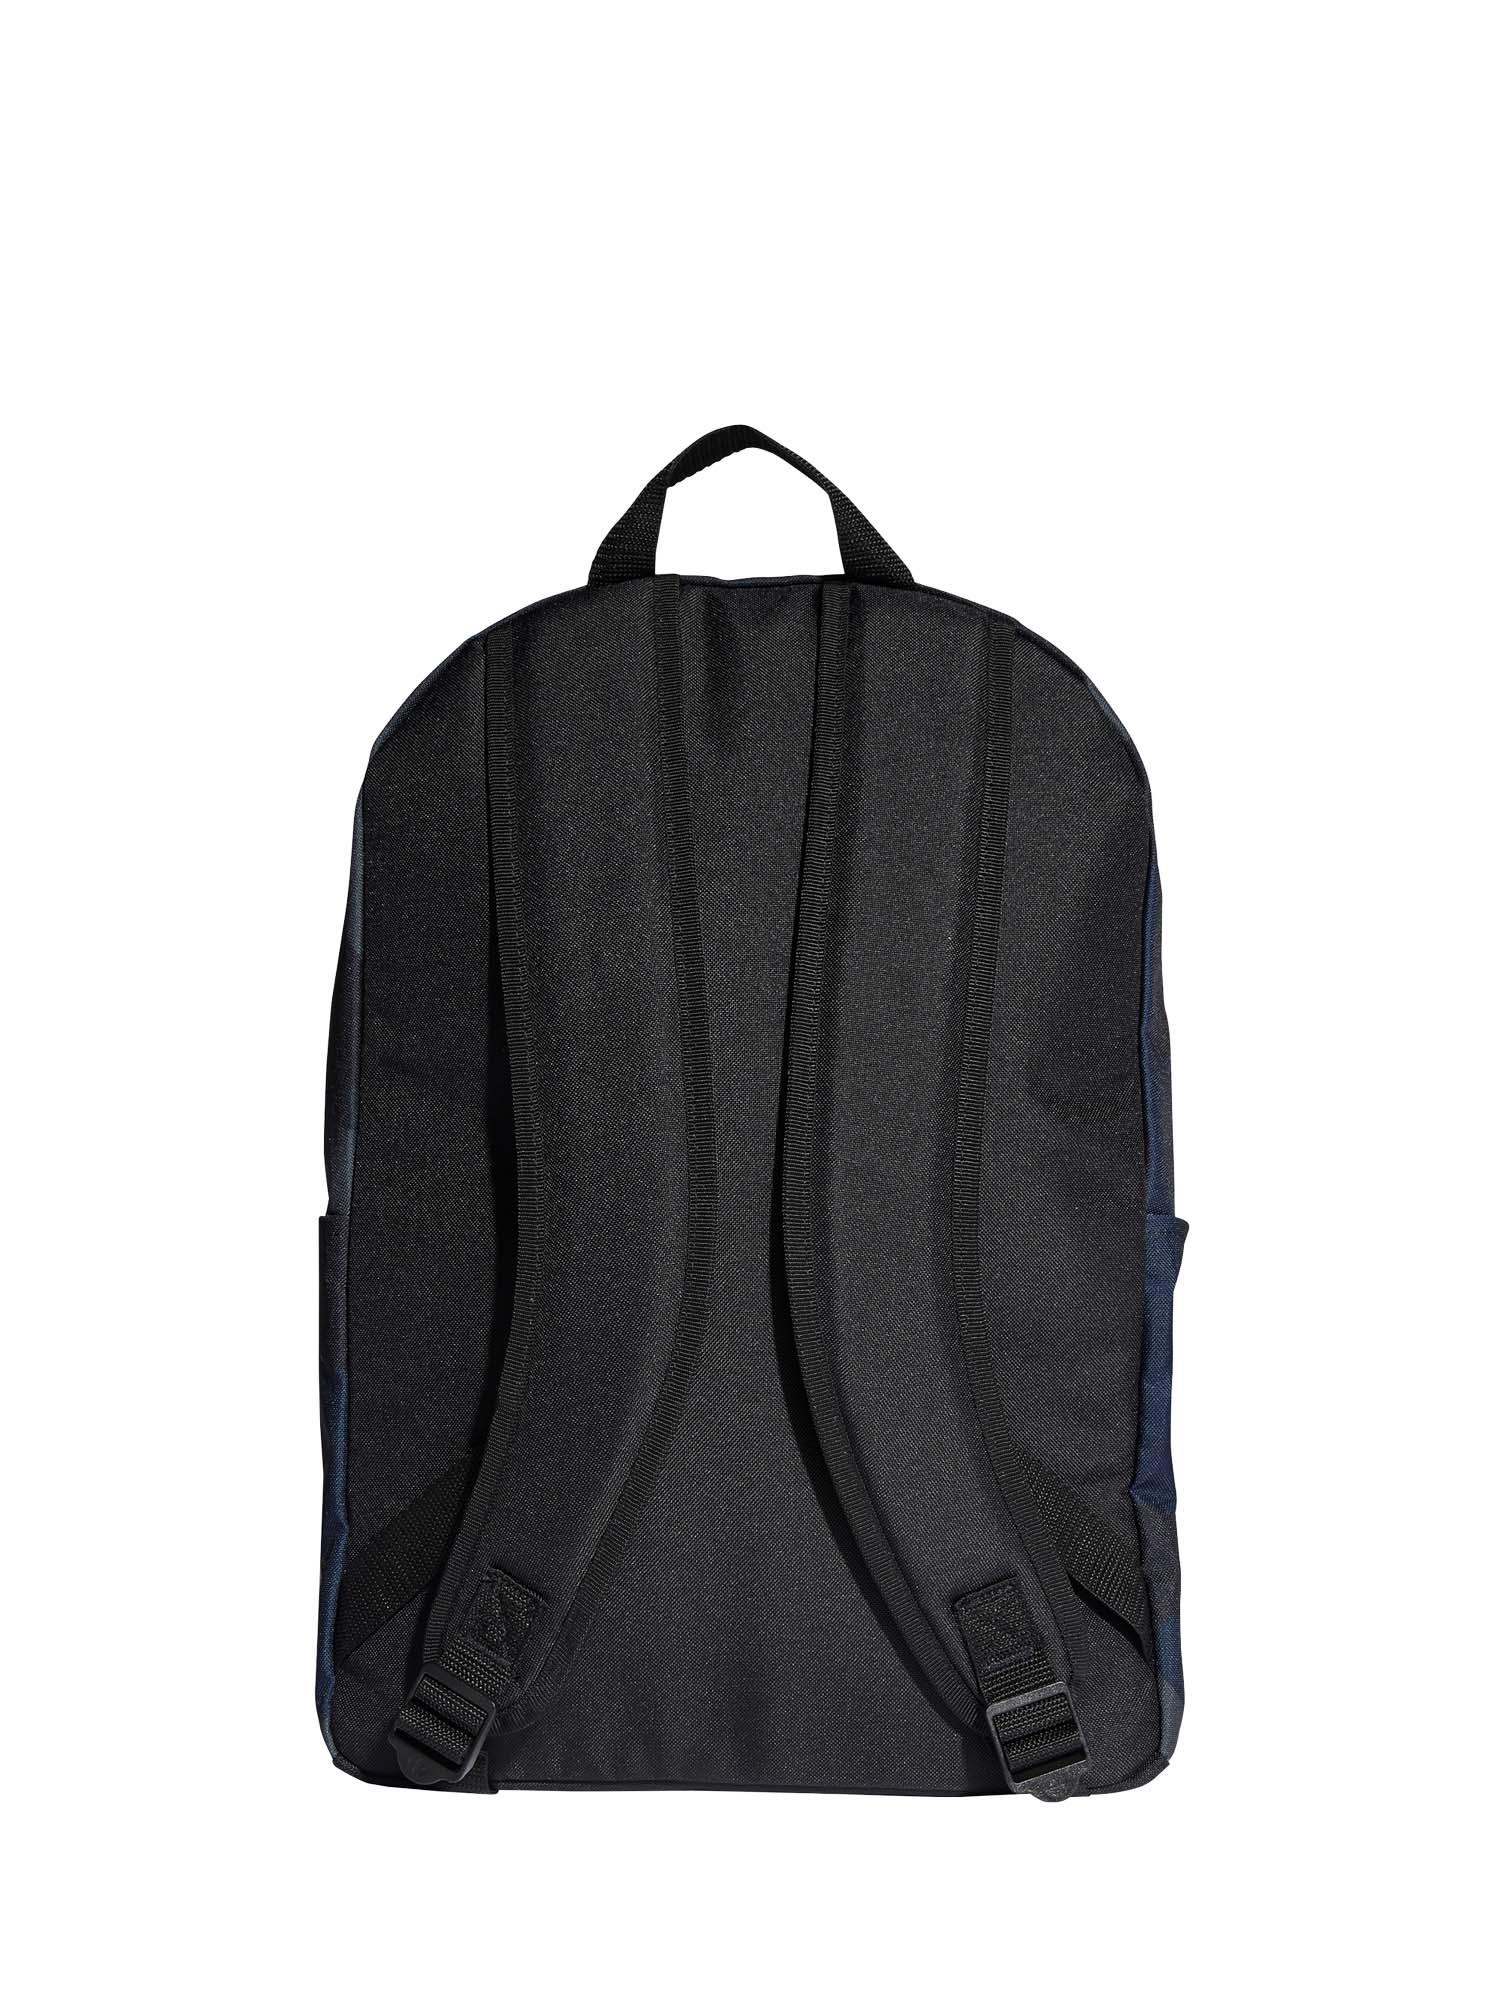 Backpack Classic Adidas H34627 Originals Camo